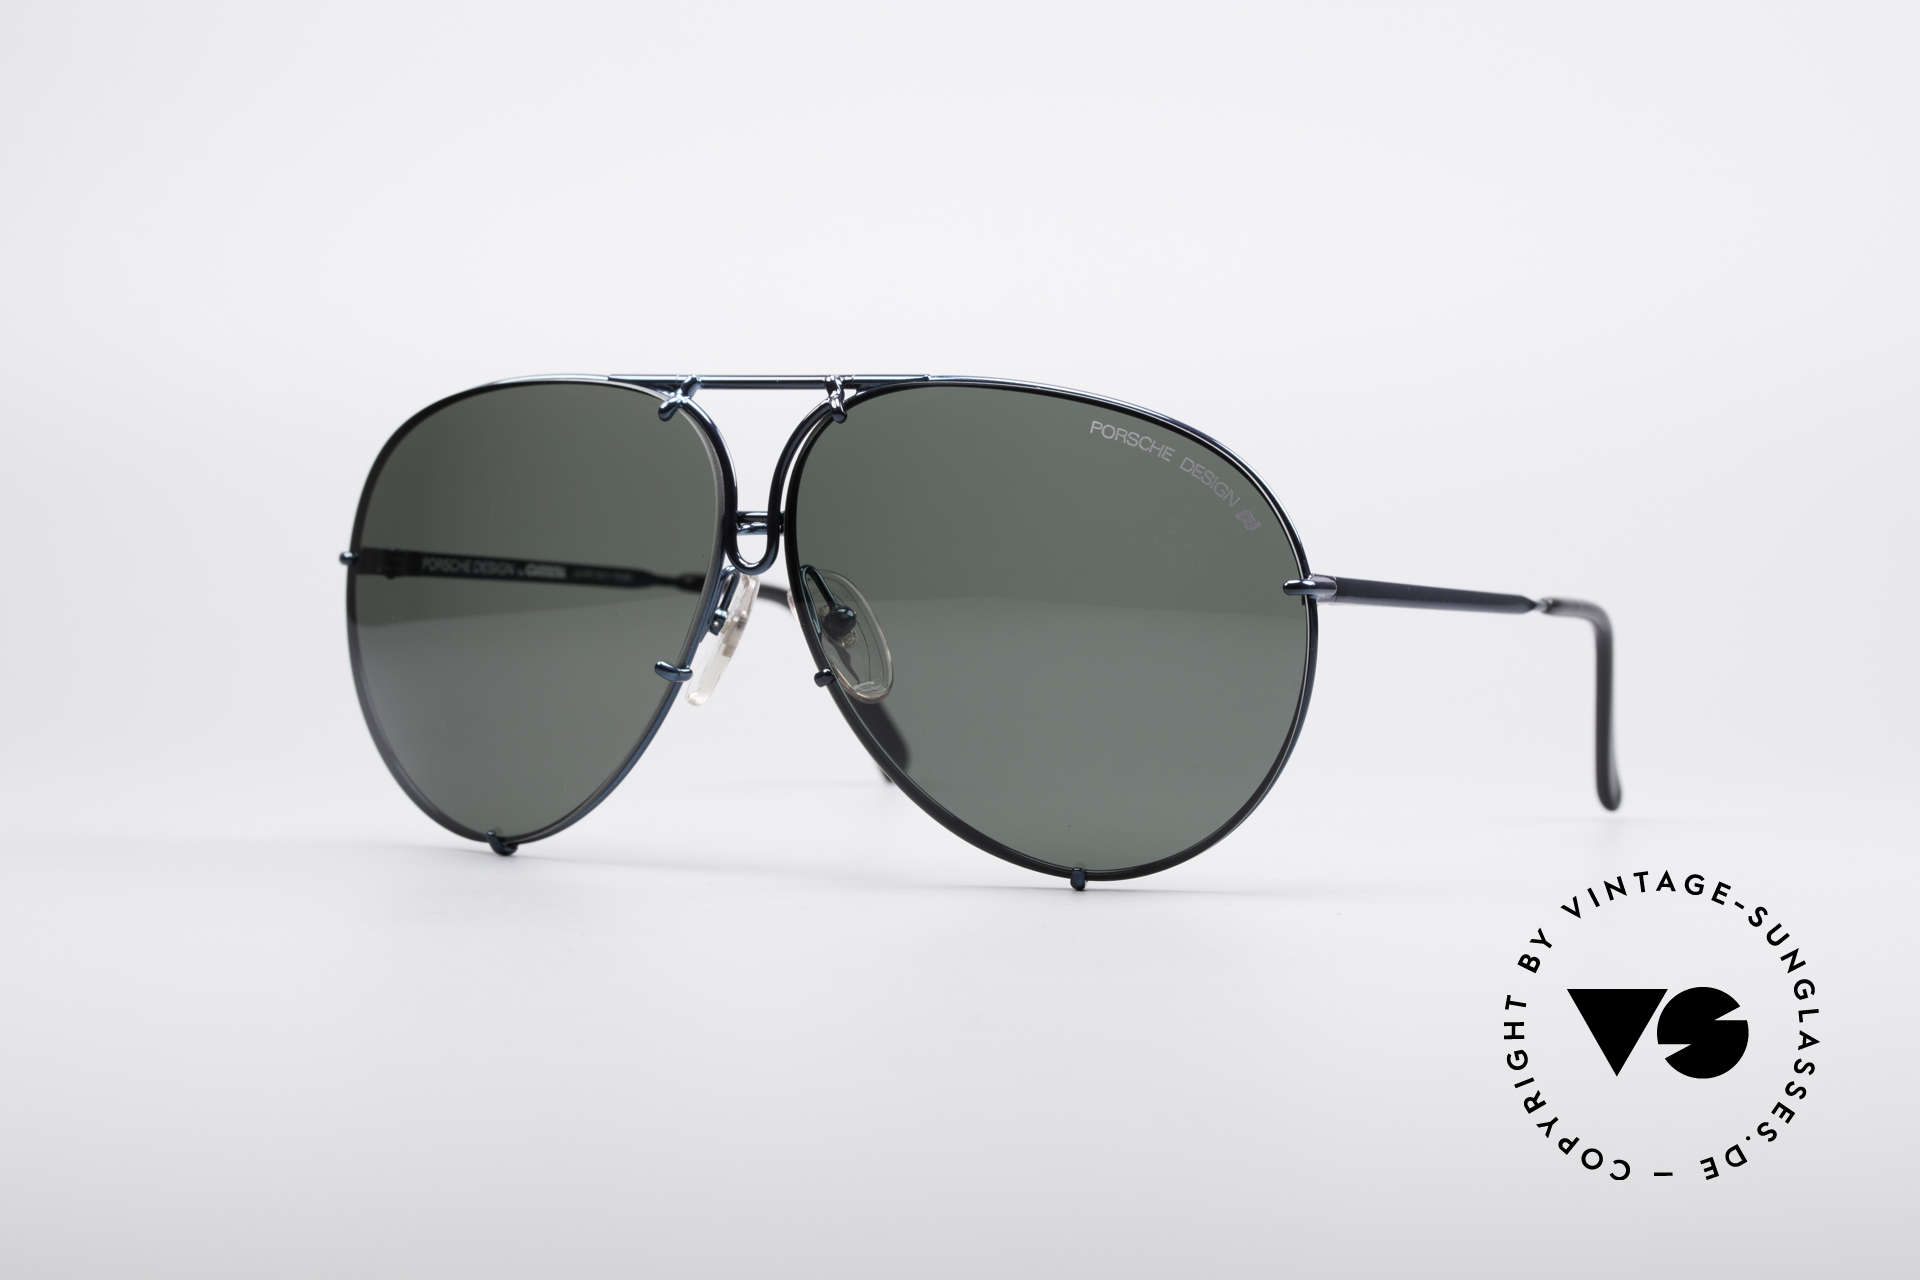 Sunglasses Porsche 5623 80's Aviator Sunglasses